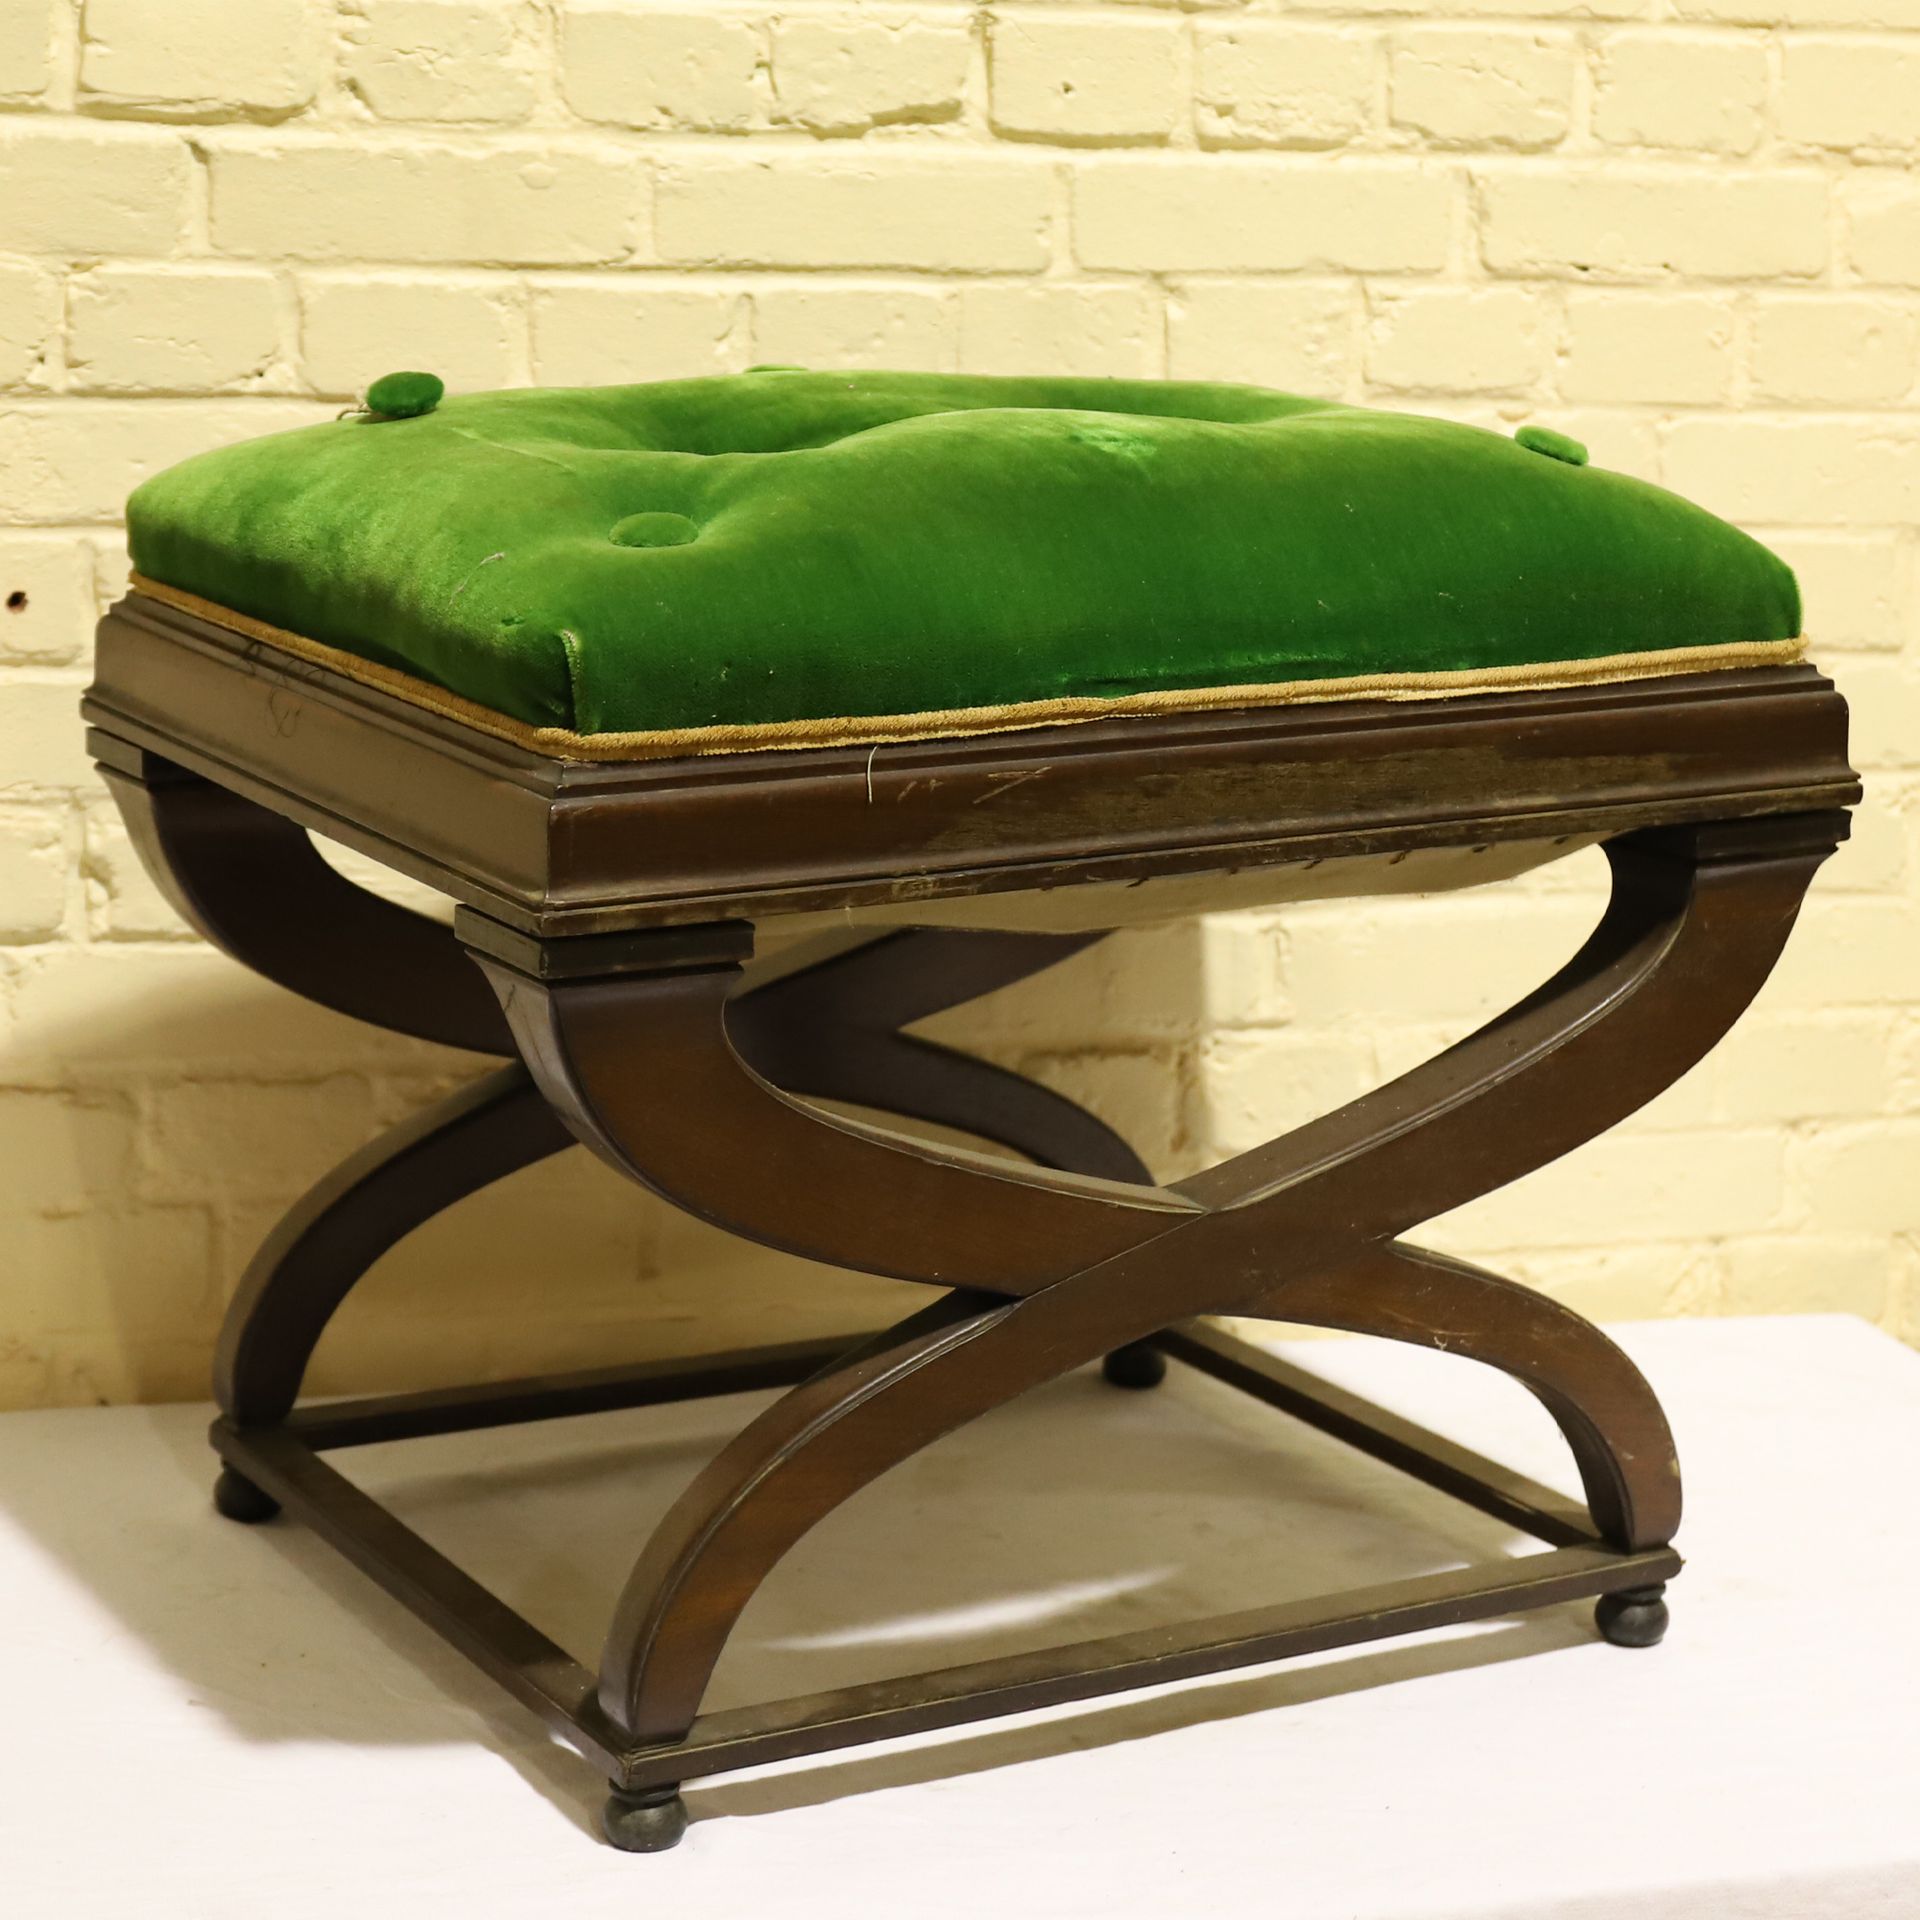 Null 桃花心木X形底座的凳子

绿色天鹅绒软垫

原样，但有一些磨损